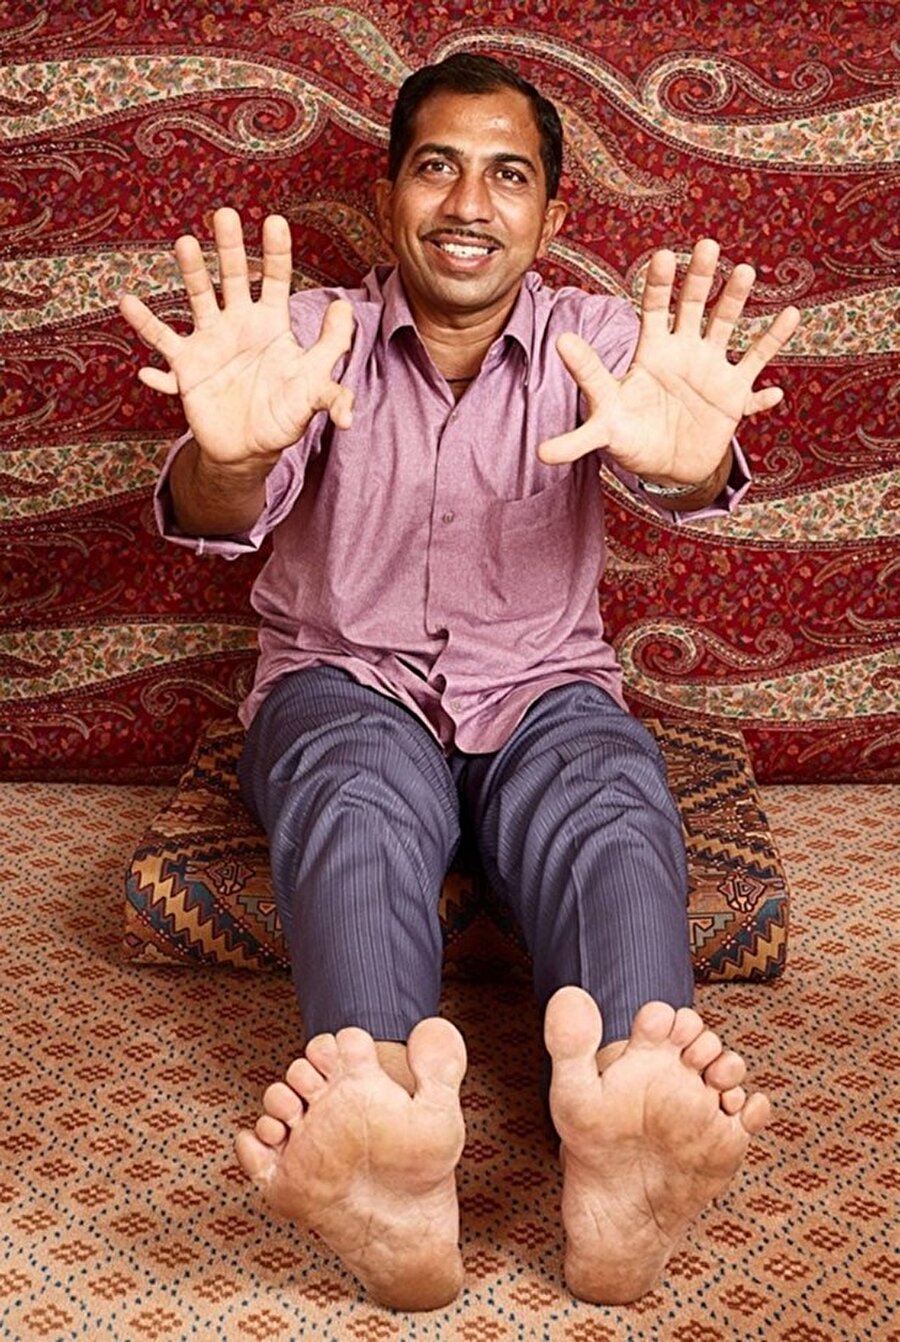 Devendra Suthar
Suthar en çok parmak sahibi insan şu an. Tam tamına 28 parmağı var.